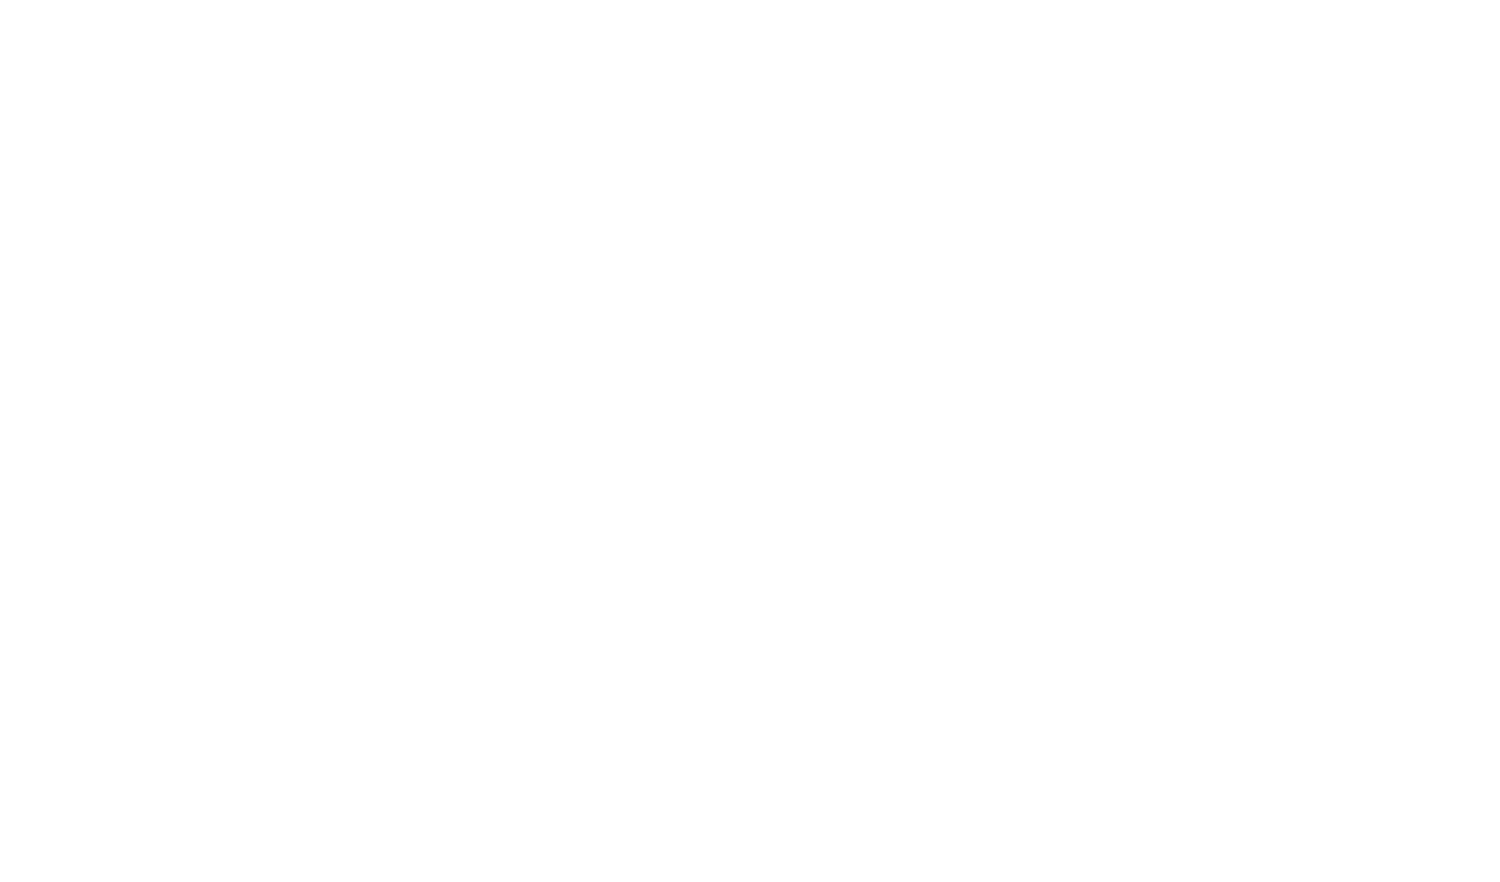 Gilchrist Farm